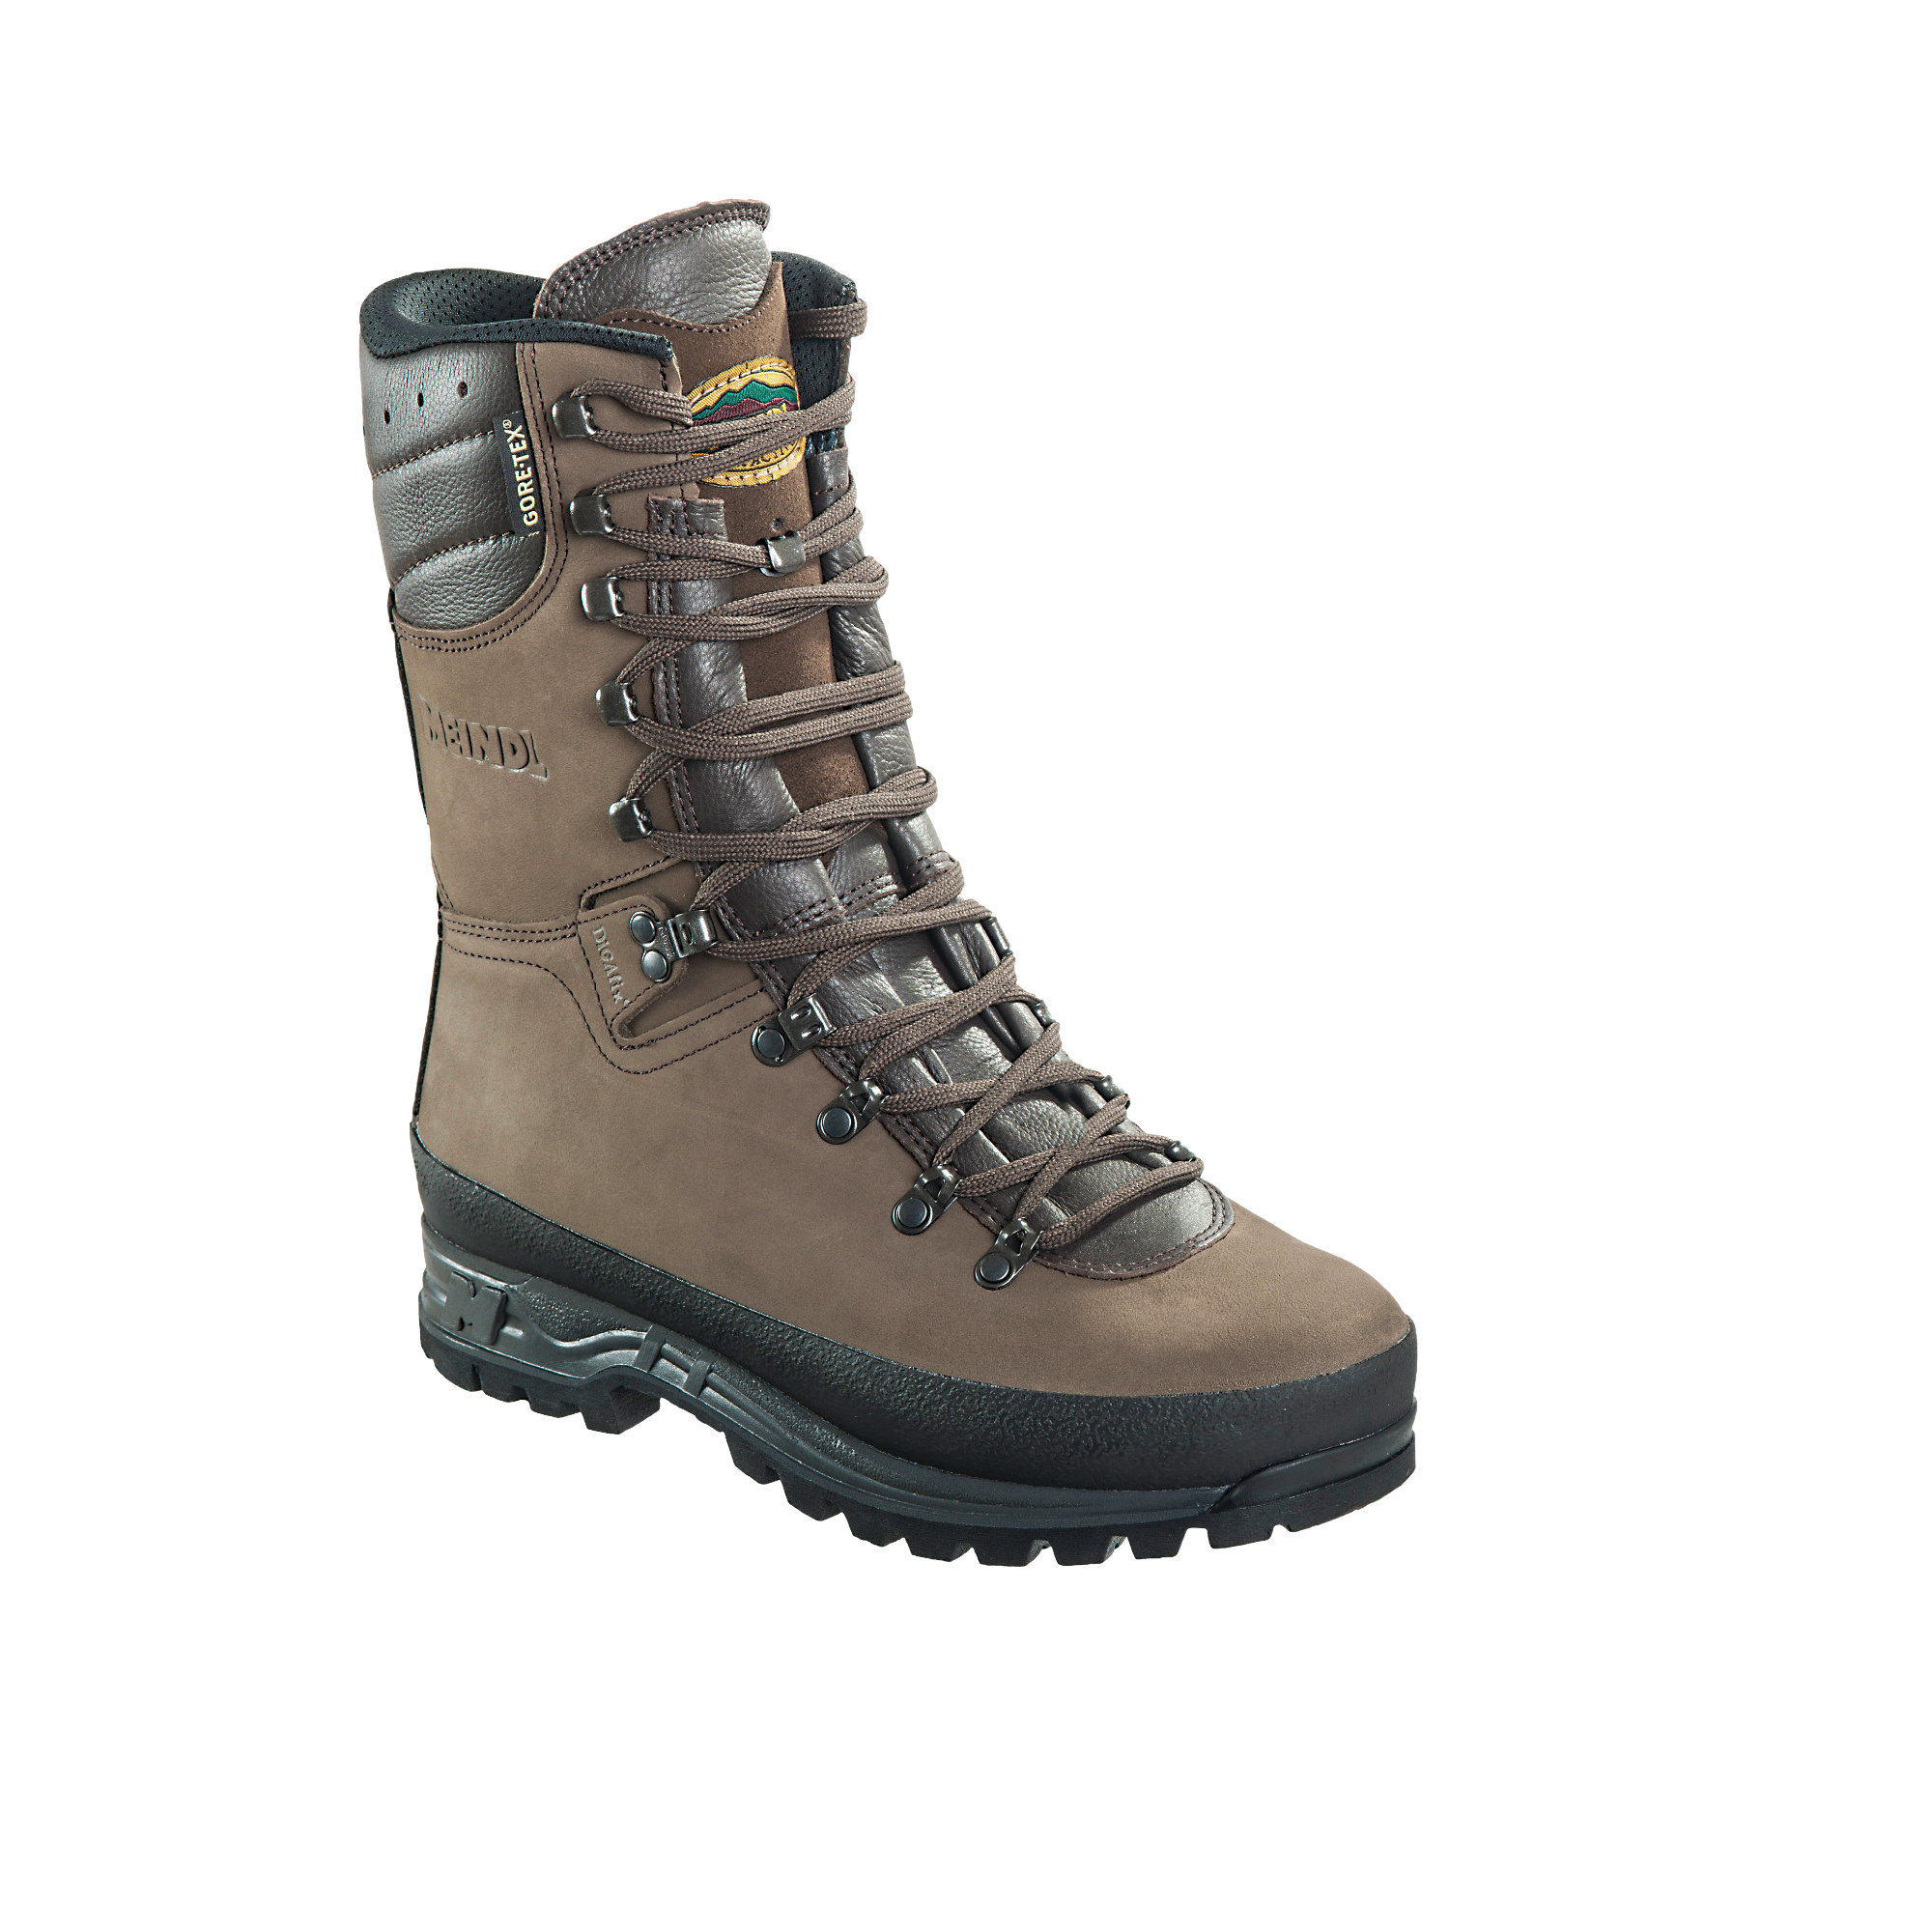 Meindl Taiga Forestry Boots | Bramwell International Ltd